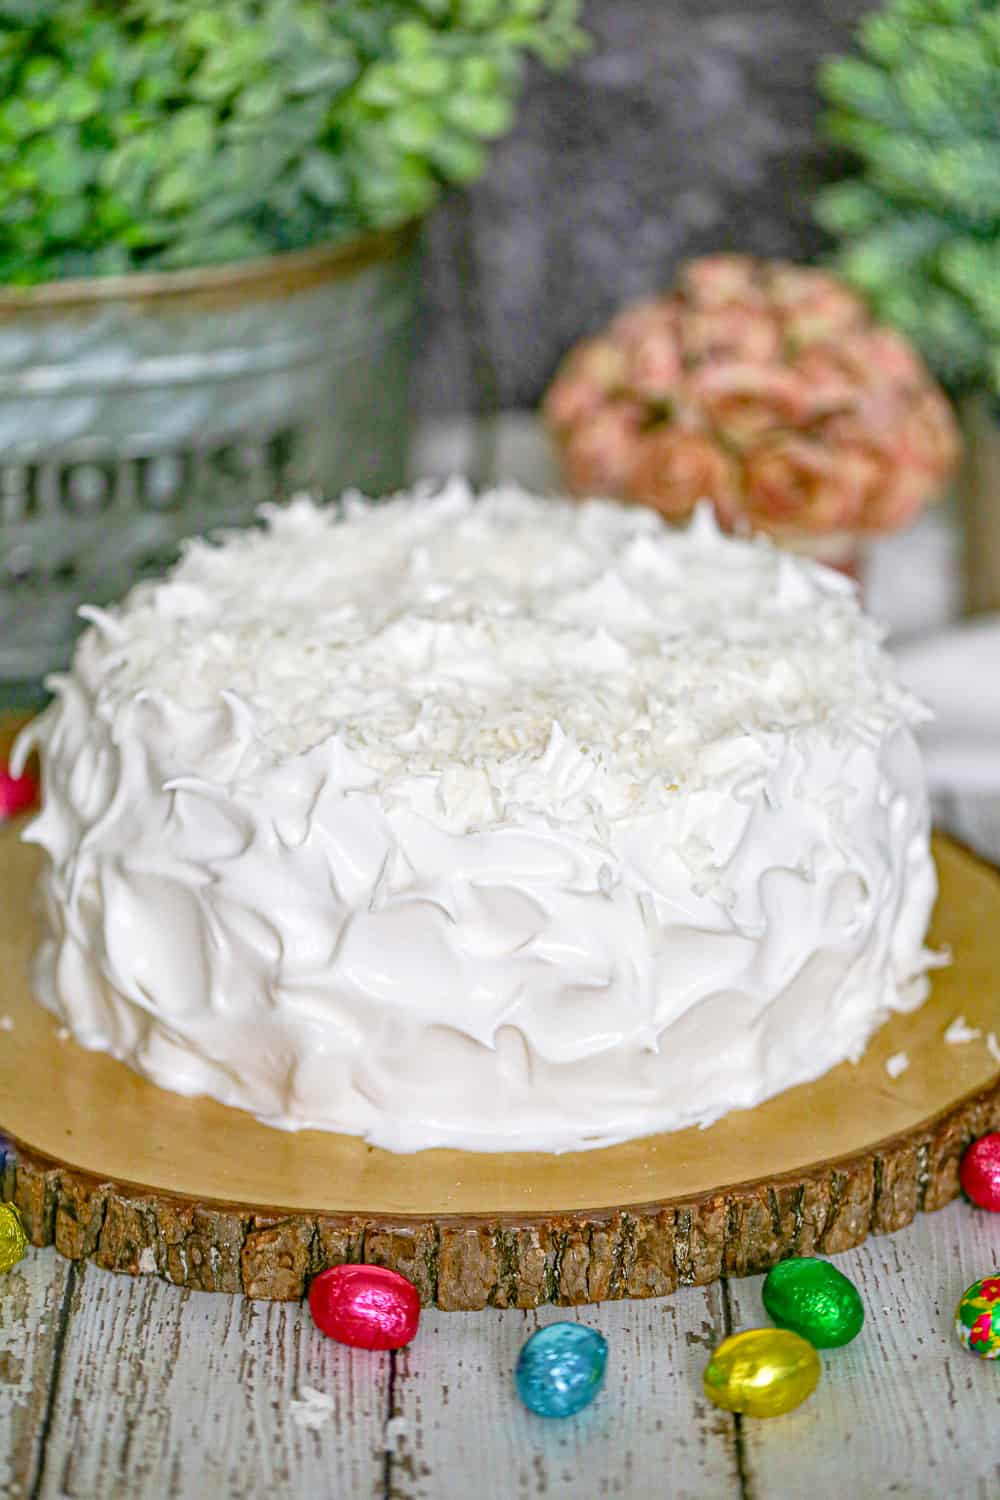 Magnolia Bakery’s Coconut Layer Cake